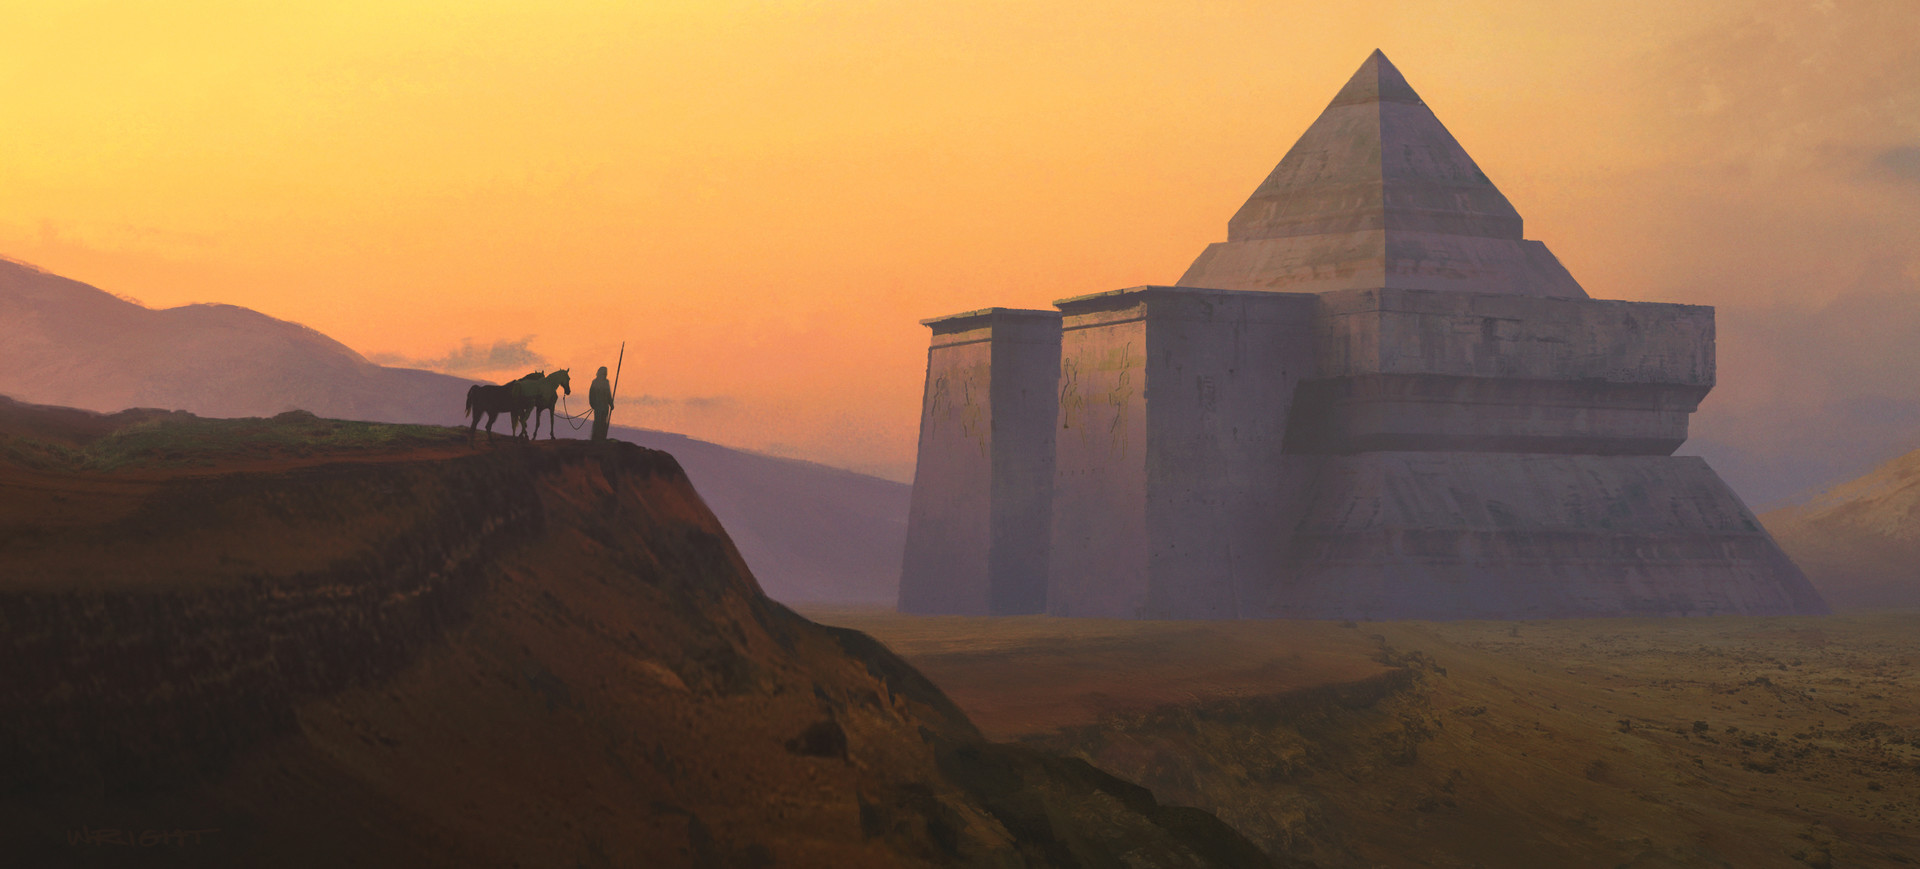 Digital painting de pyramide